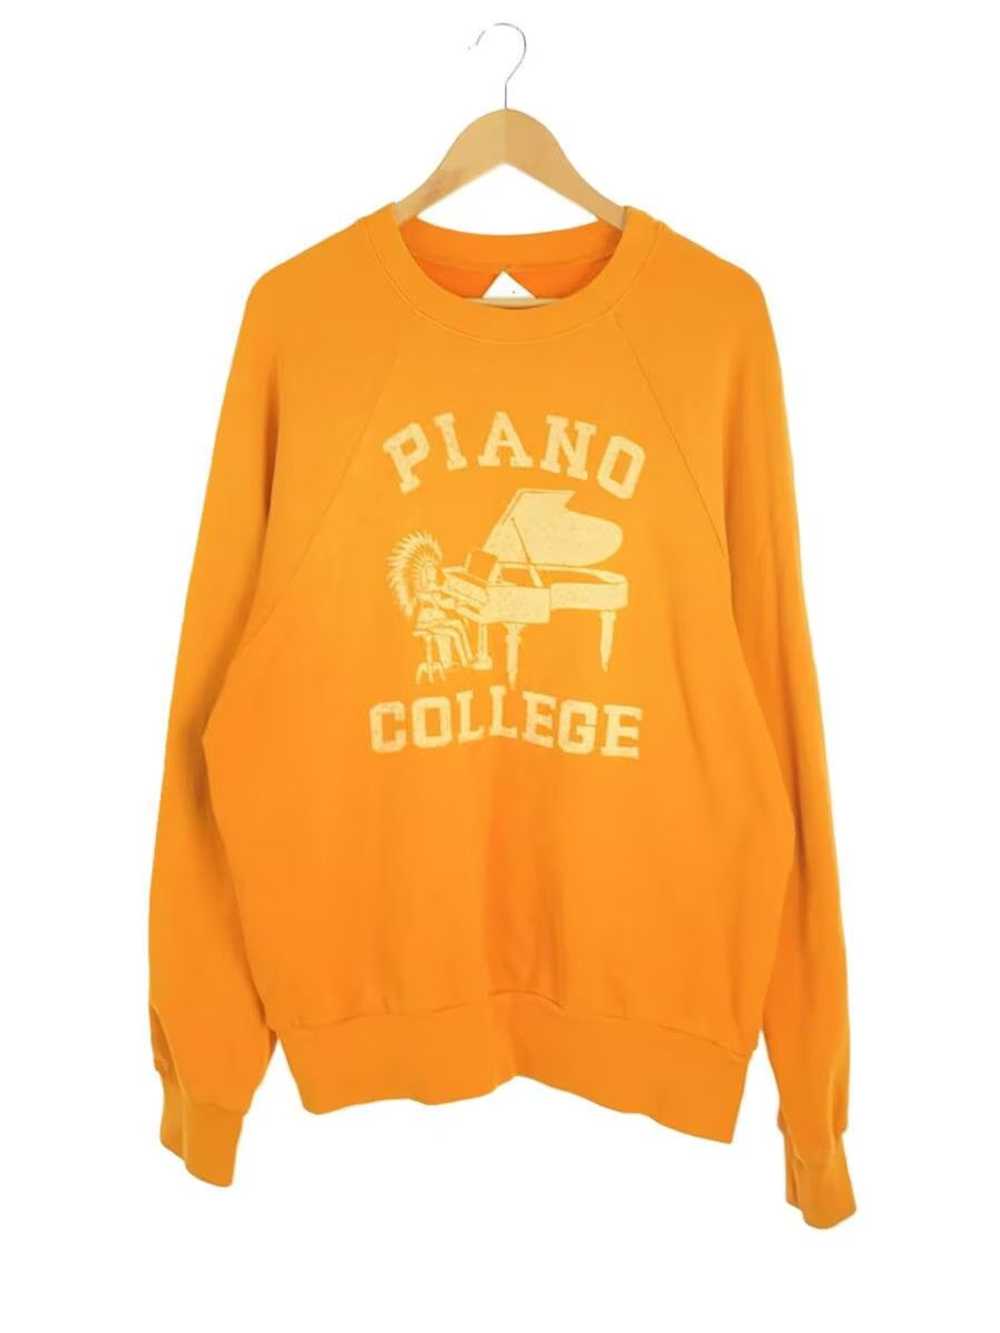 Kapital Piano College Raglan Sweatshirt - image 1